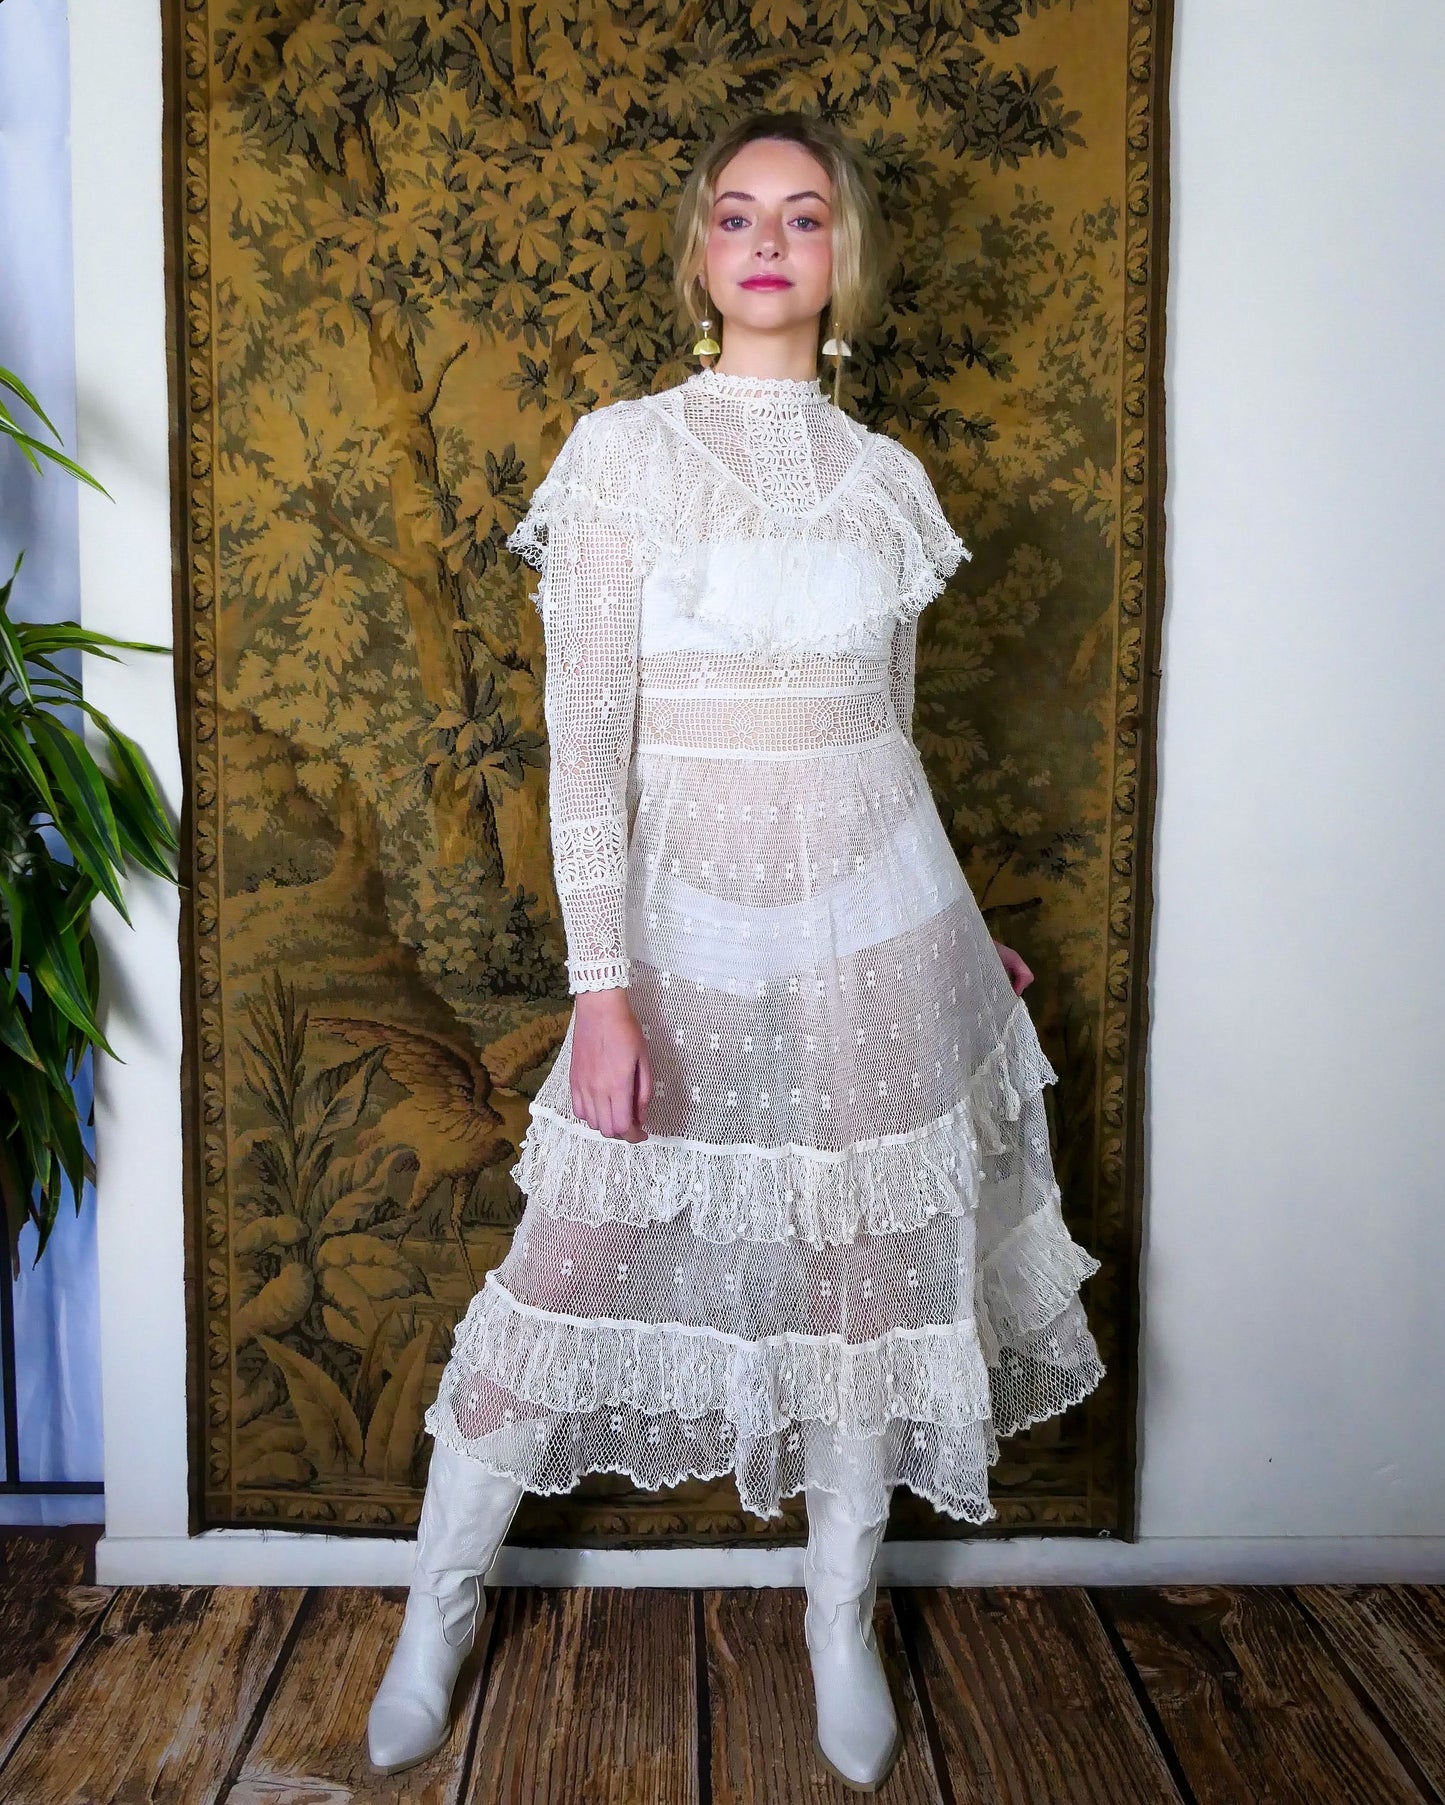 Model is wearing white Lim's crochet maxi dress with ruffles.  